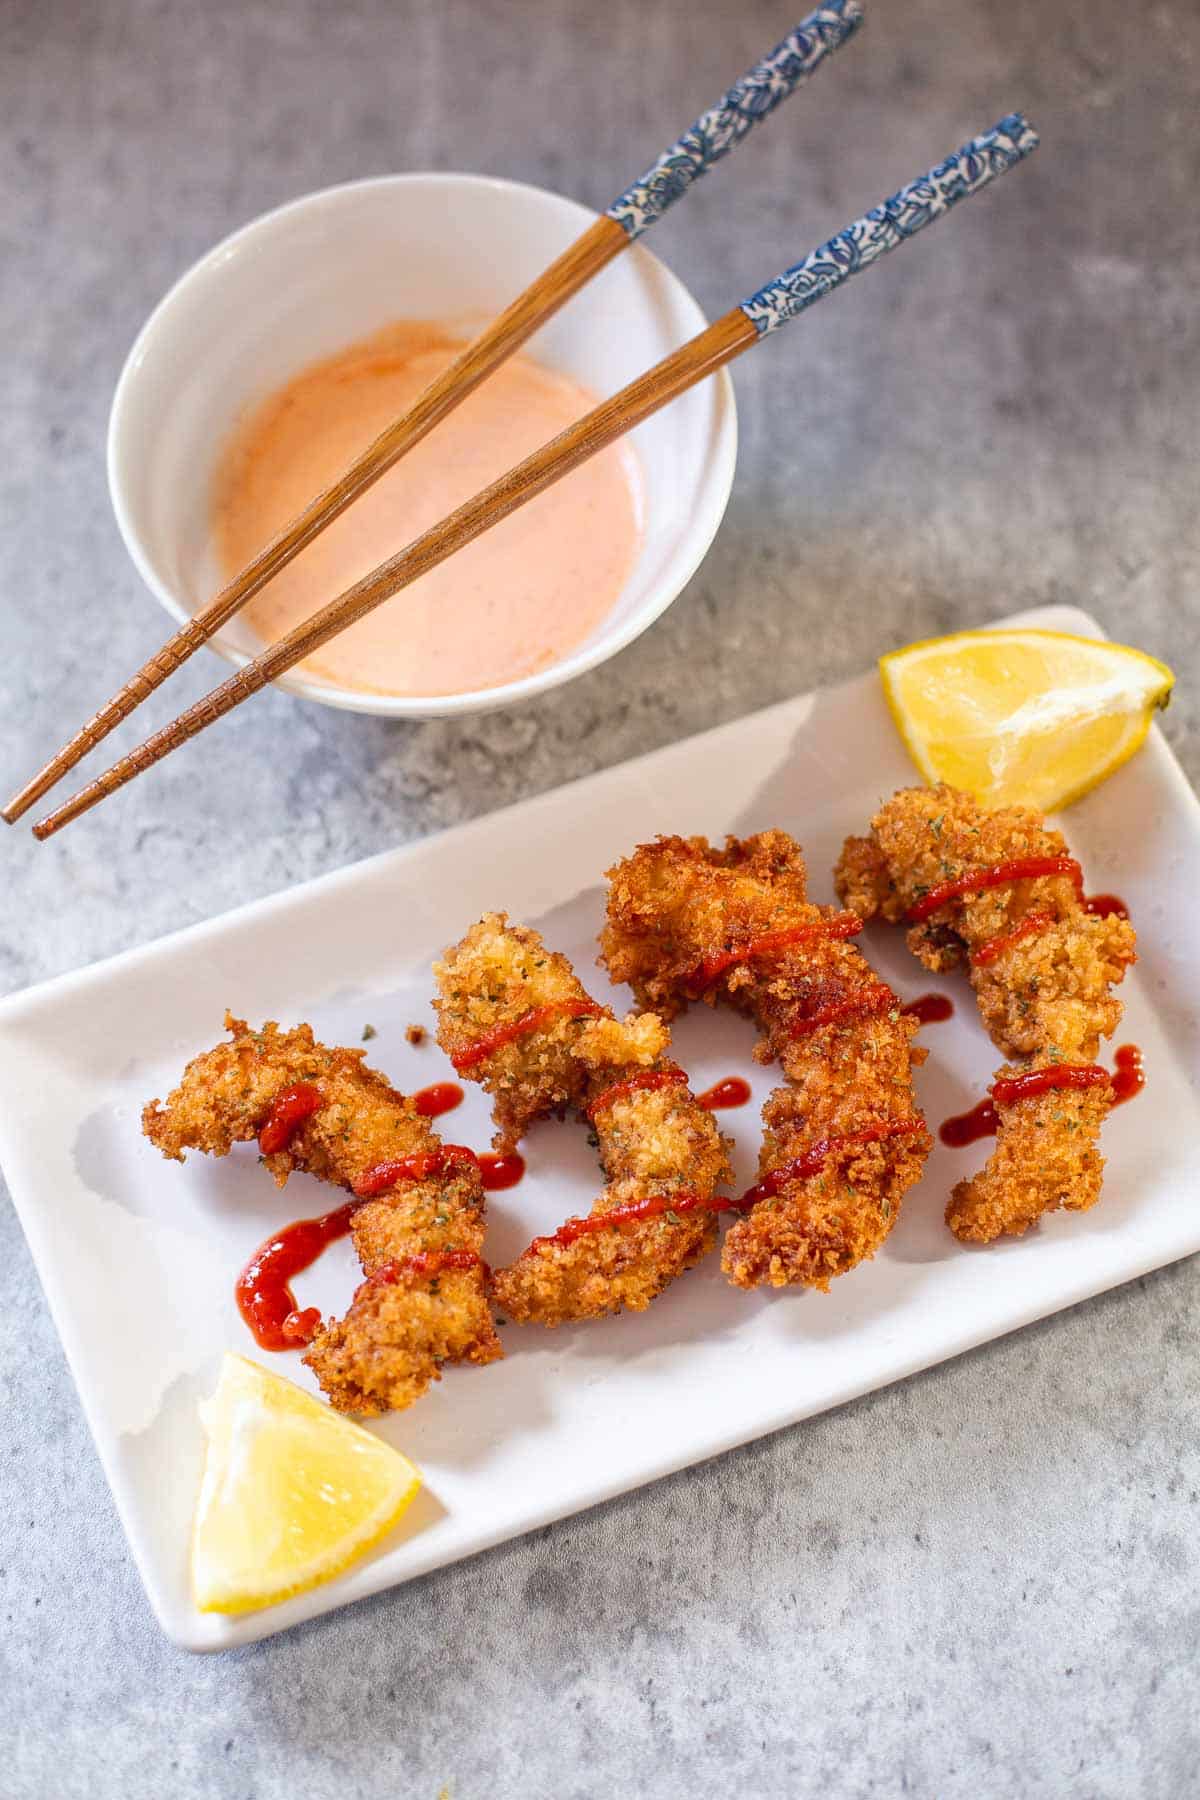 panko shrimp with sriracha and lemon wedges beside spicy mayo and chopsticks